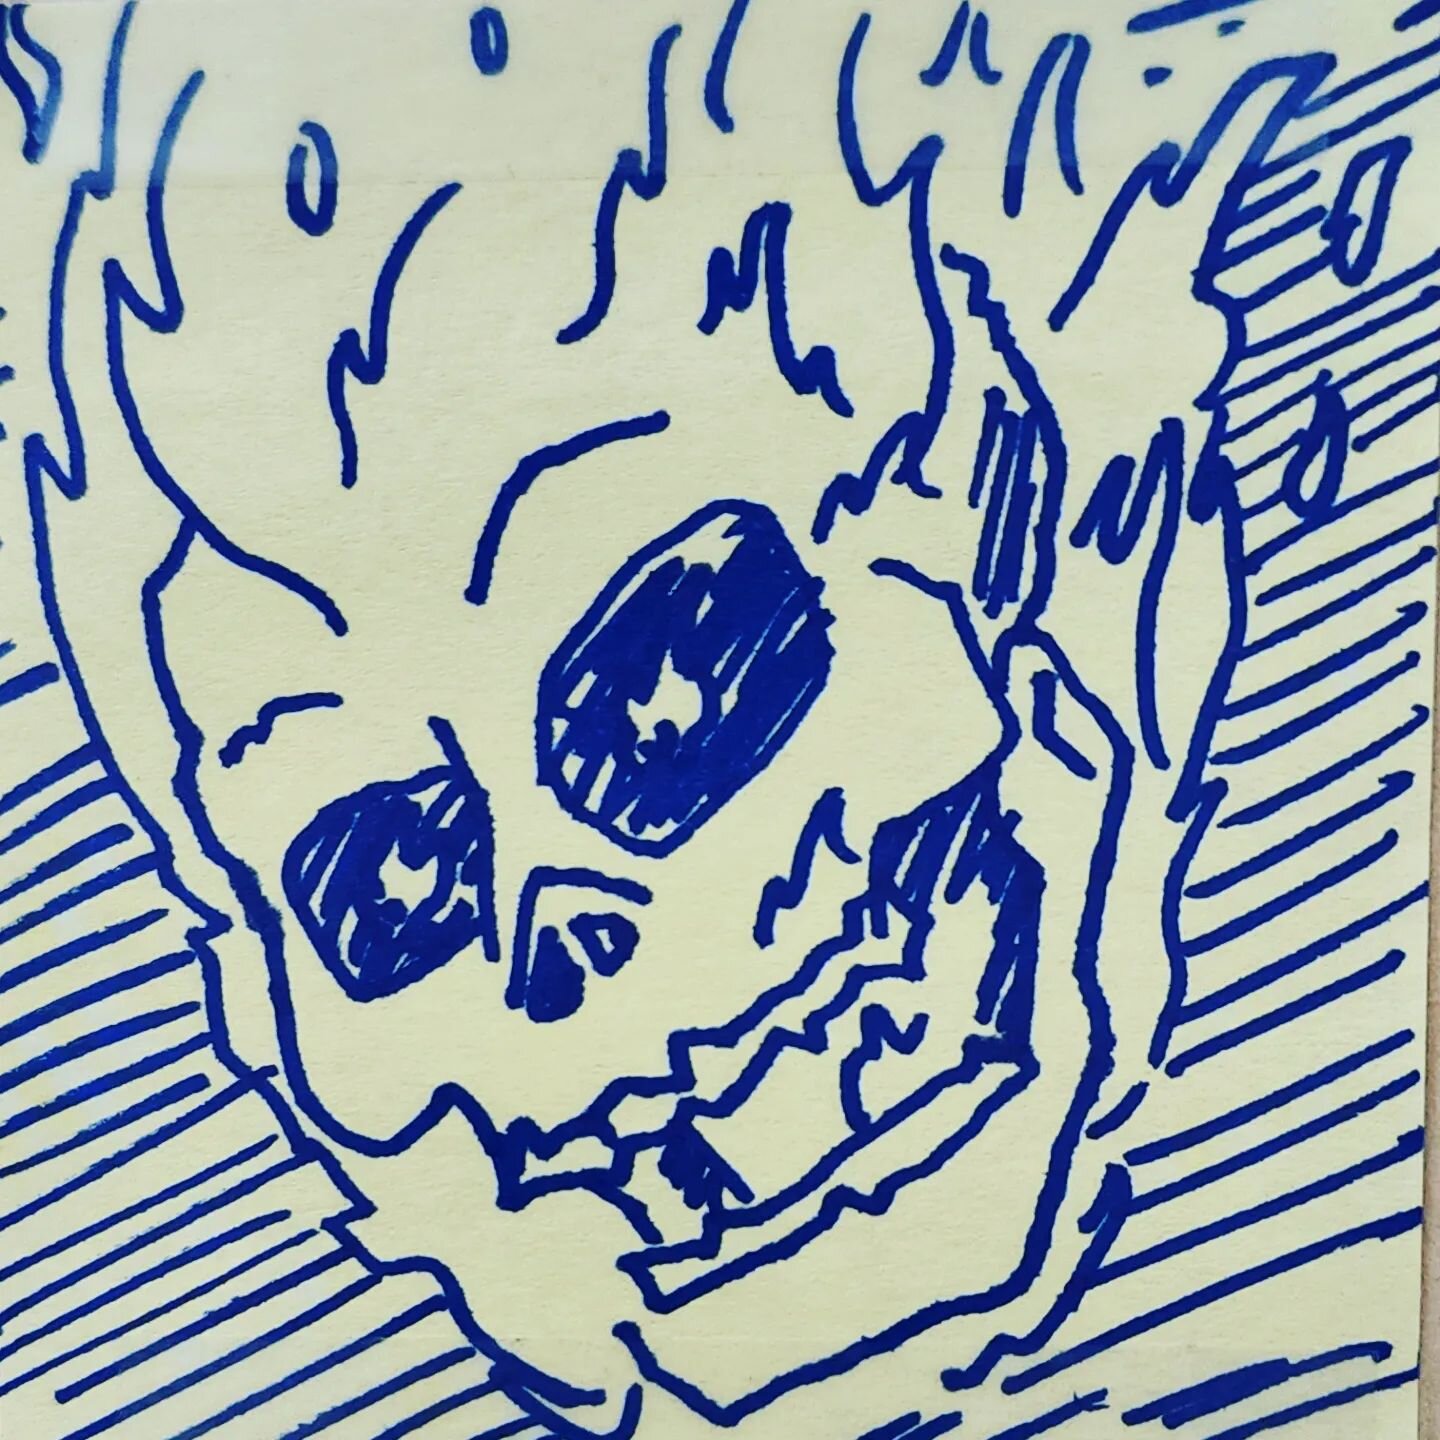 Sometimes you just gotta doodle a flaming skull...

#comicbooks #comicart #comicbookart #drawing #wip #digitaldrawing #digitalillustration #digitalart #artist #art #artwork #originalartwork #originalcharacters #originalcharacter #indiecomics #indie #